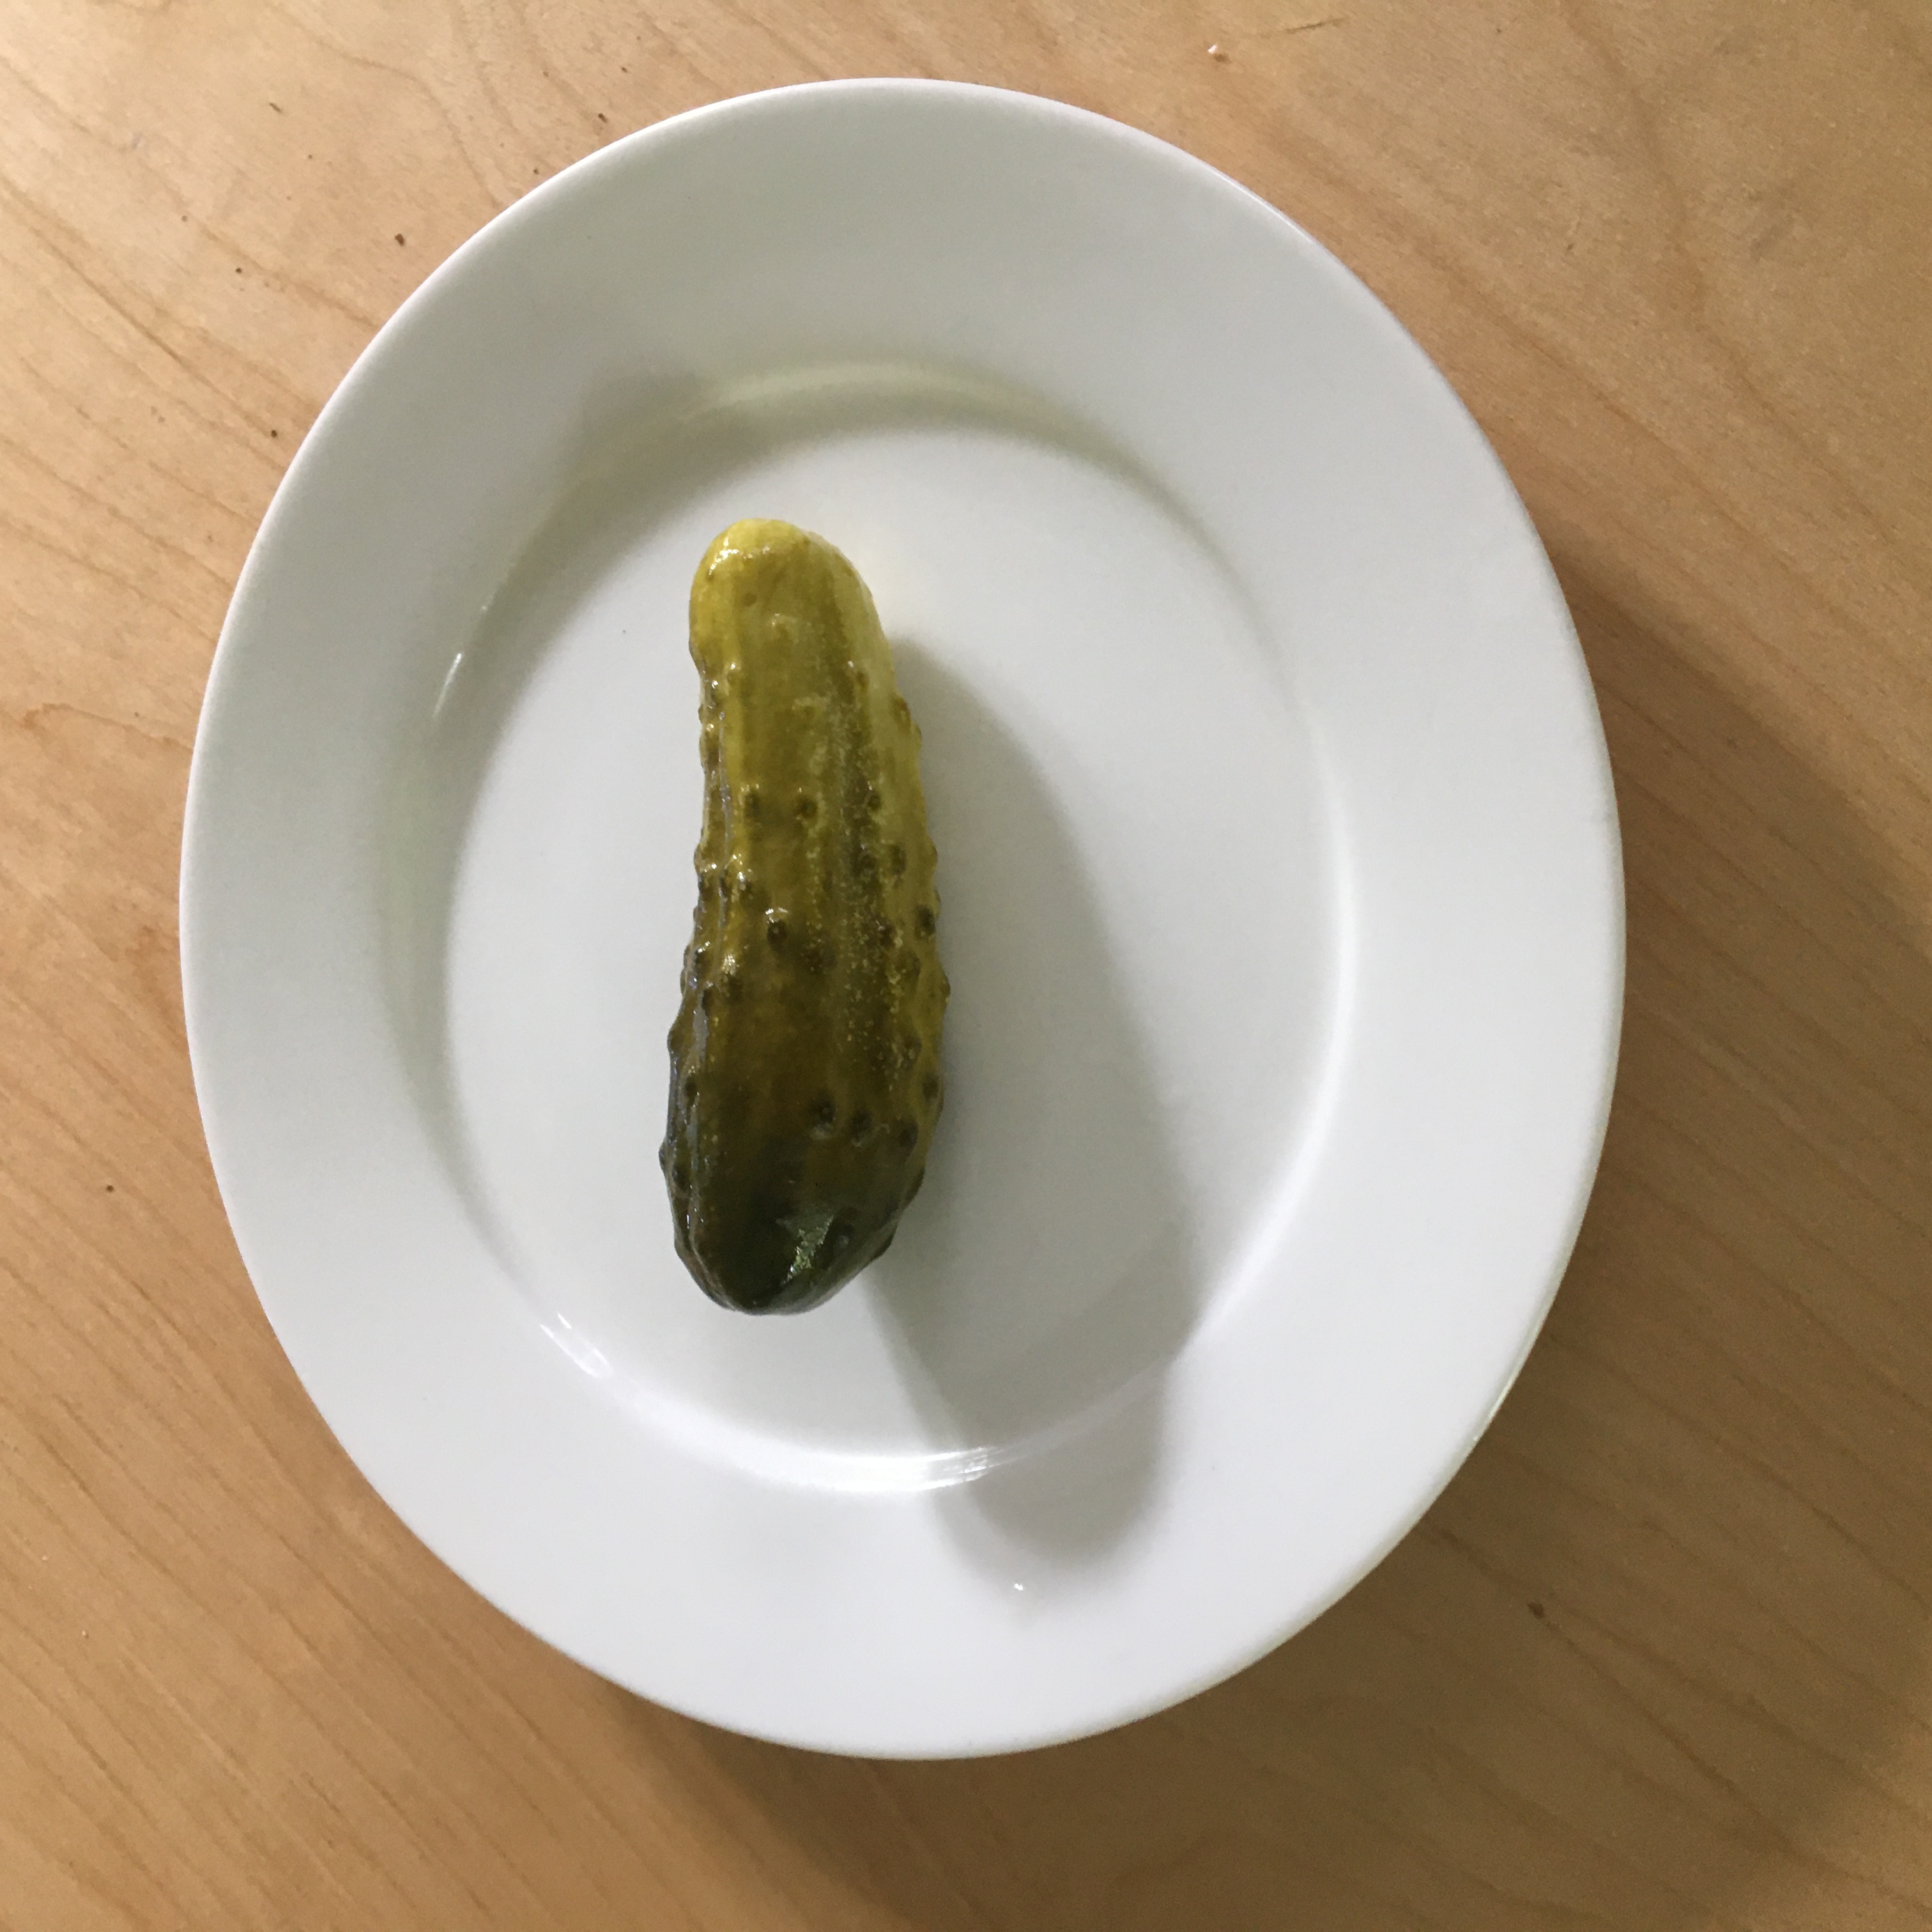 a single homemade half-sour pickle